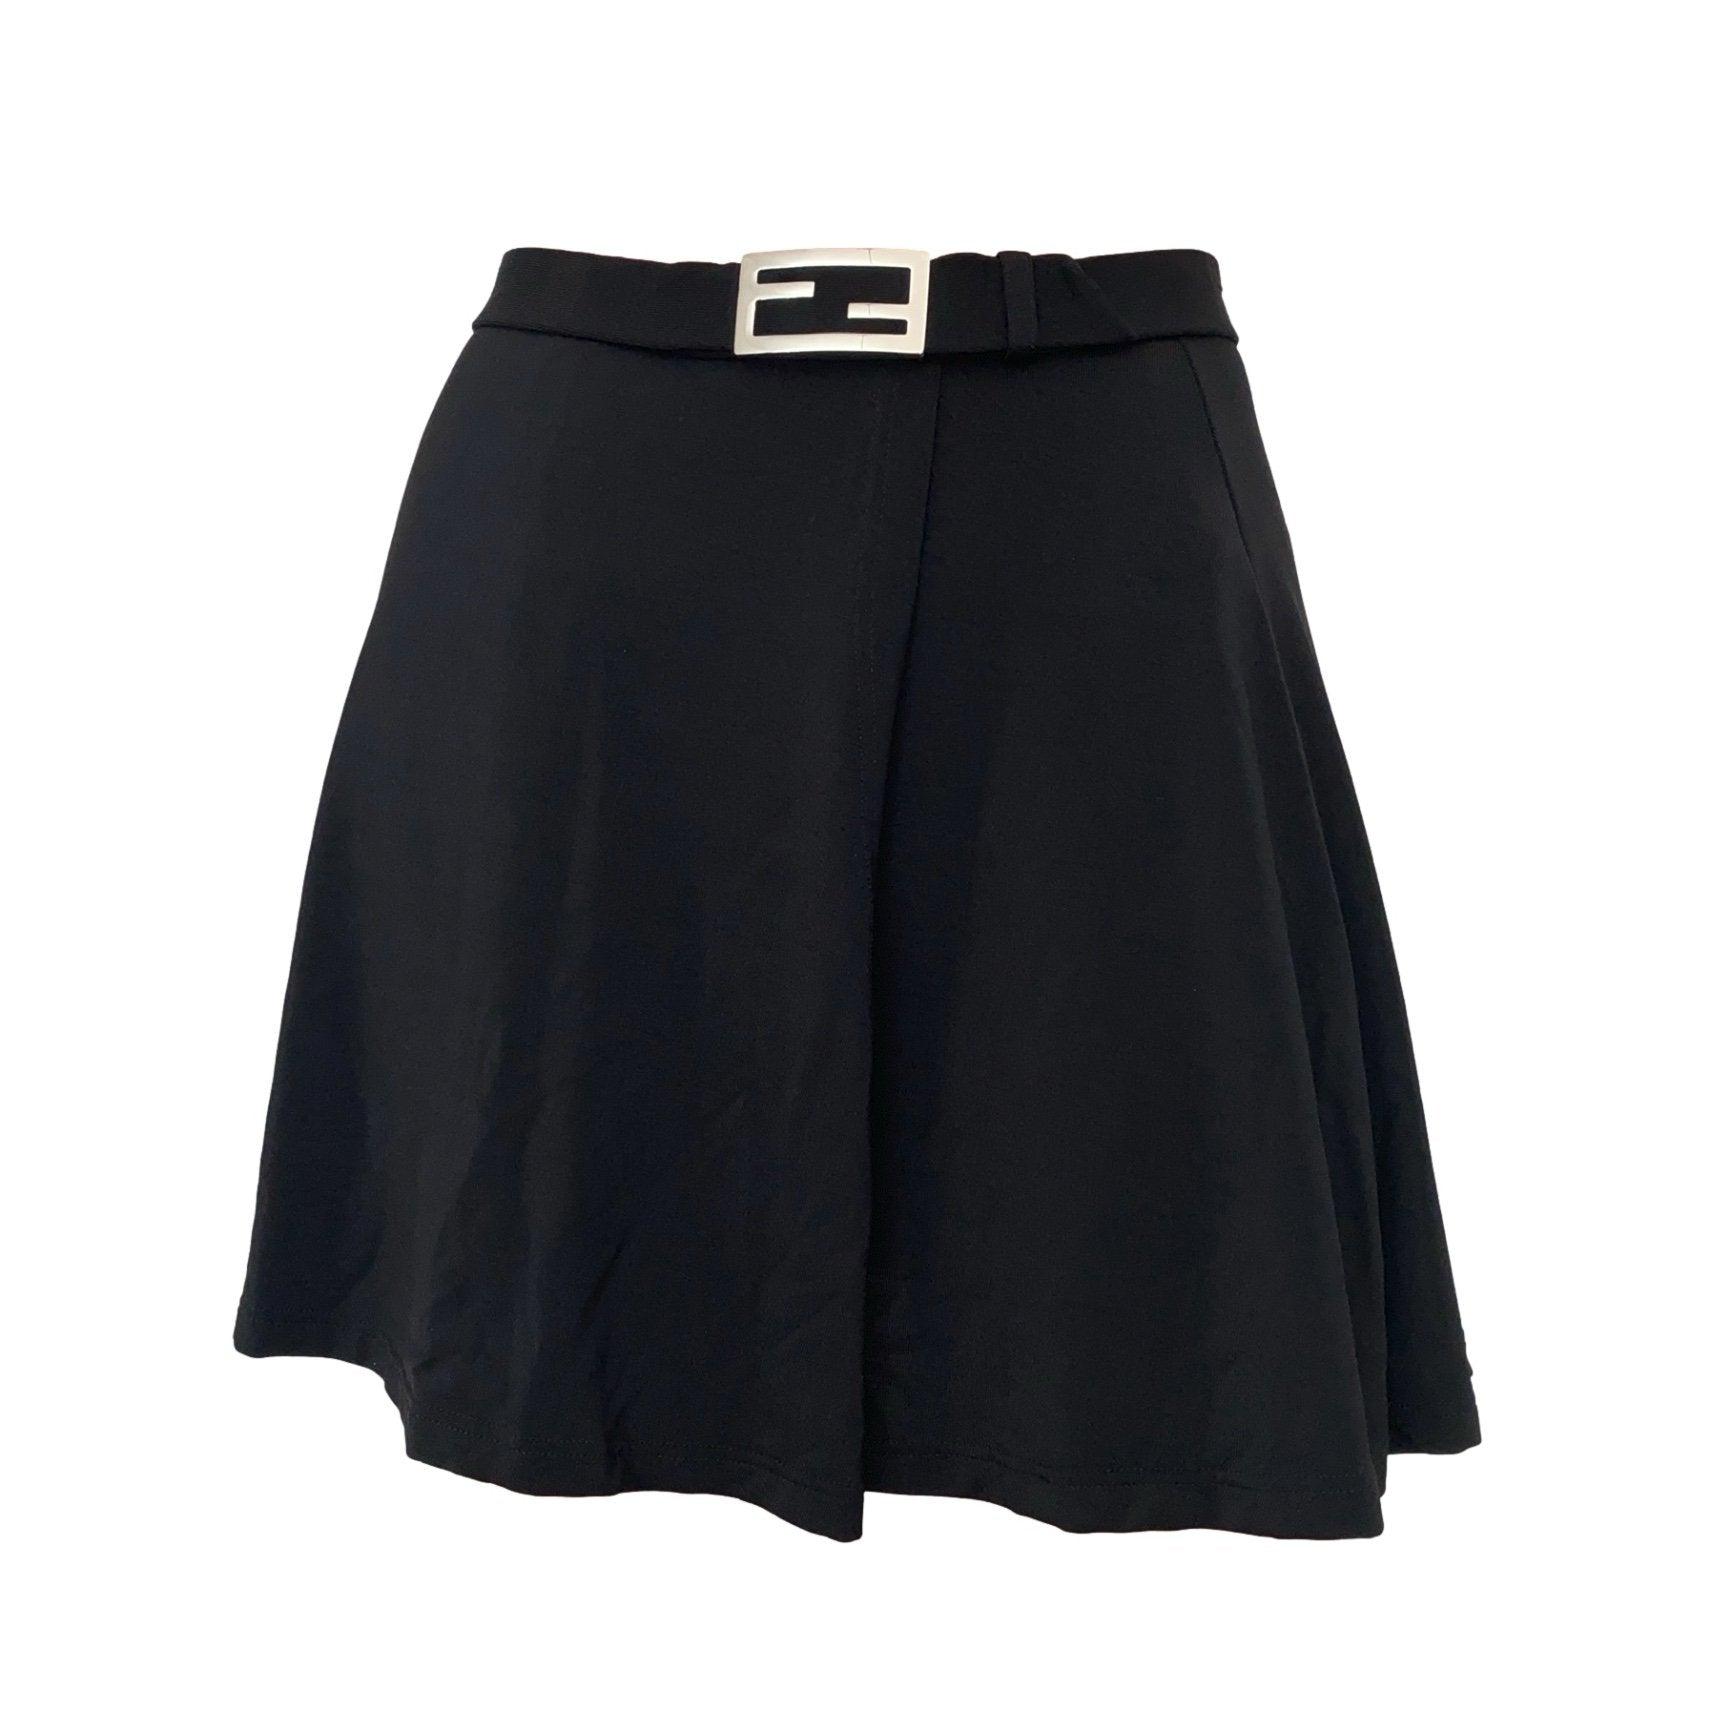 Fendi Black Stretch Skirt - Apparel